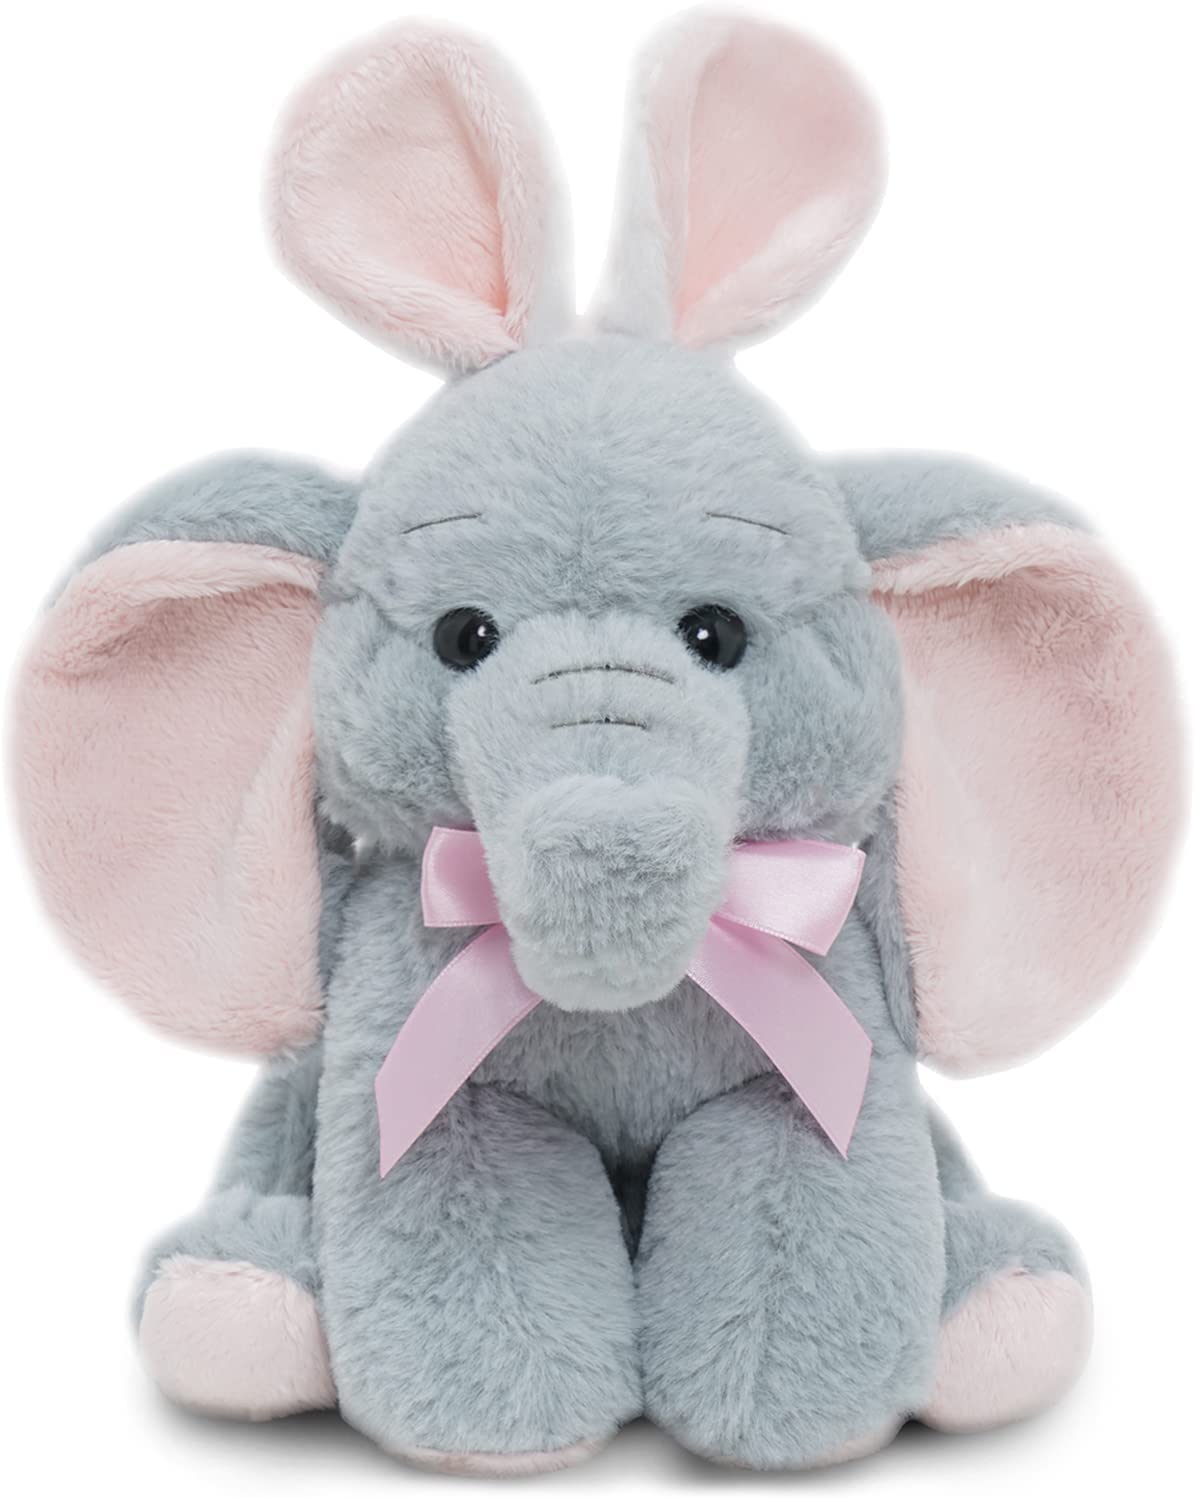 Easter Elephant With Bunny Ears